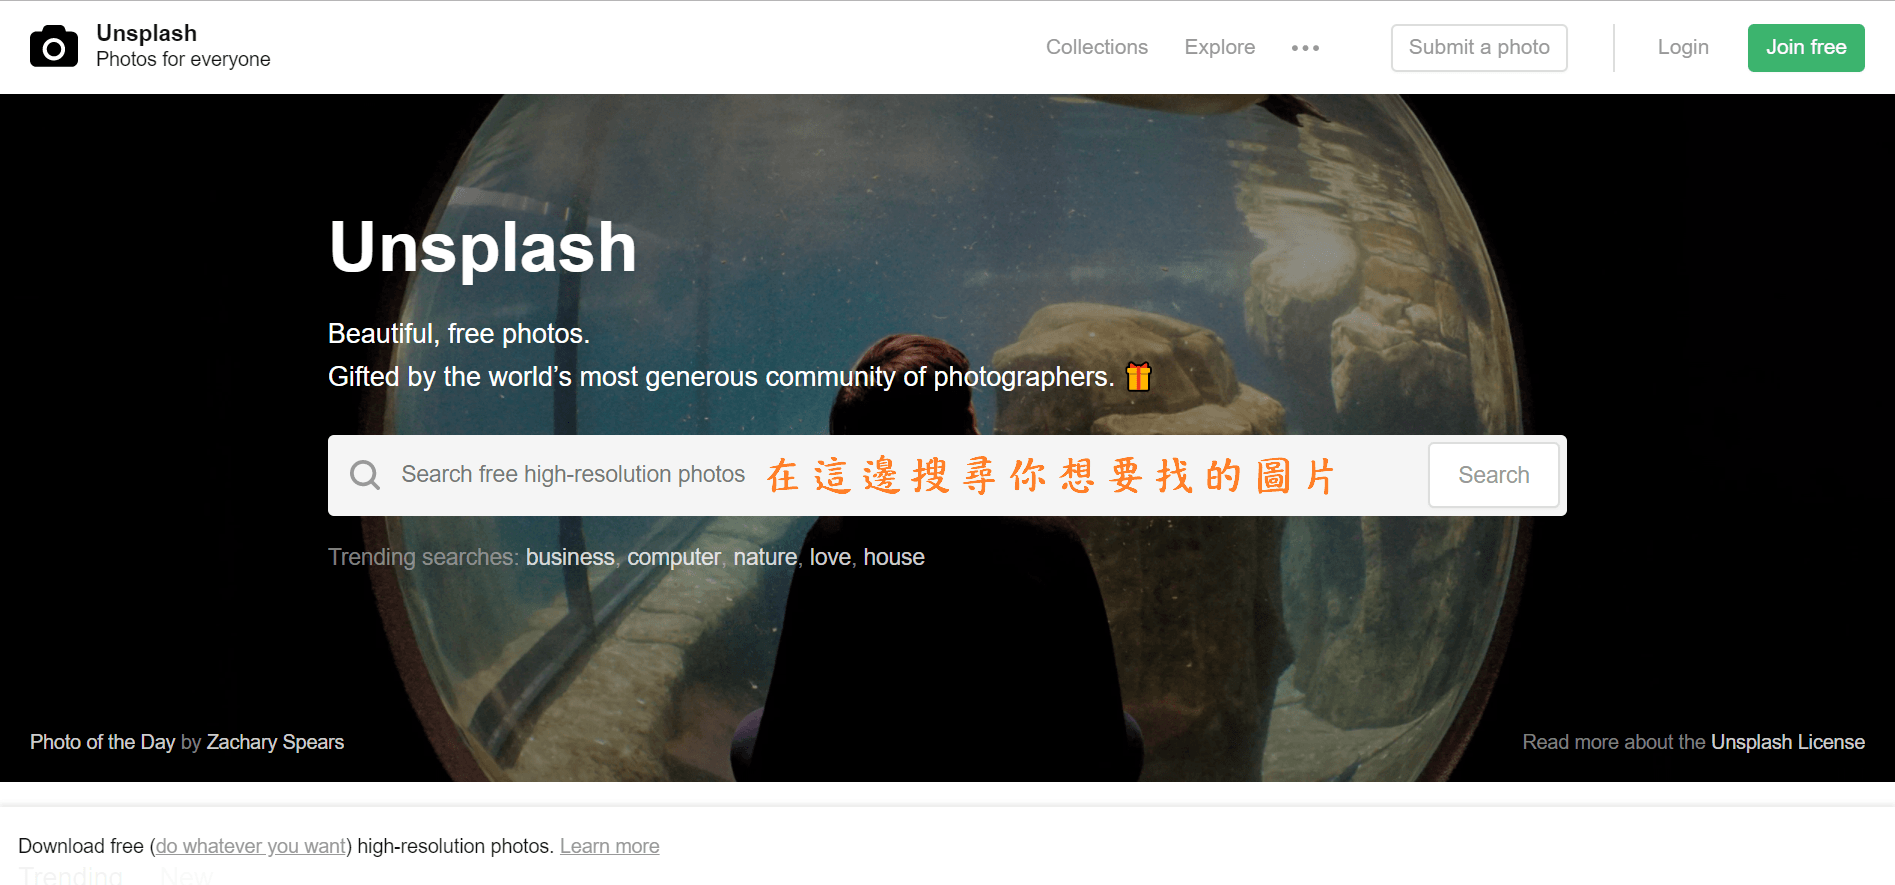 Image 004 - 【推薦】Unsplash - 品質超高的100%免費圖庫，使用超自由